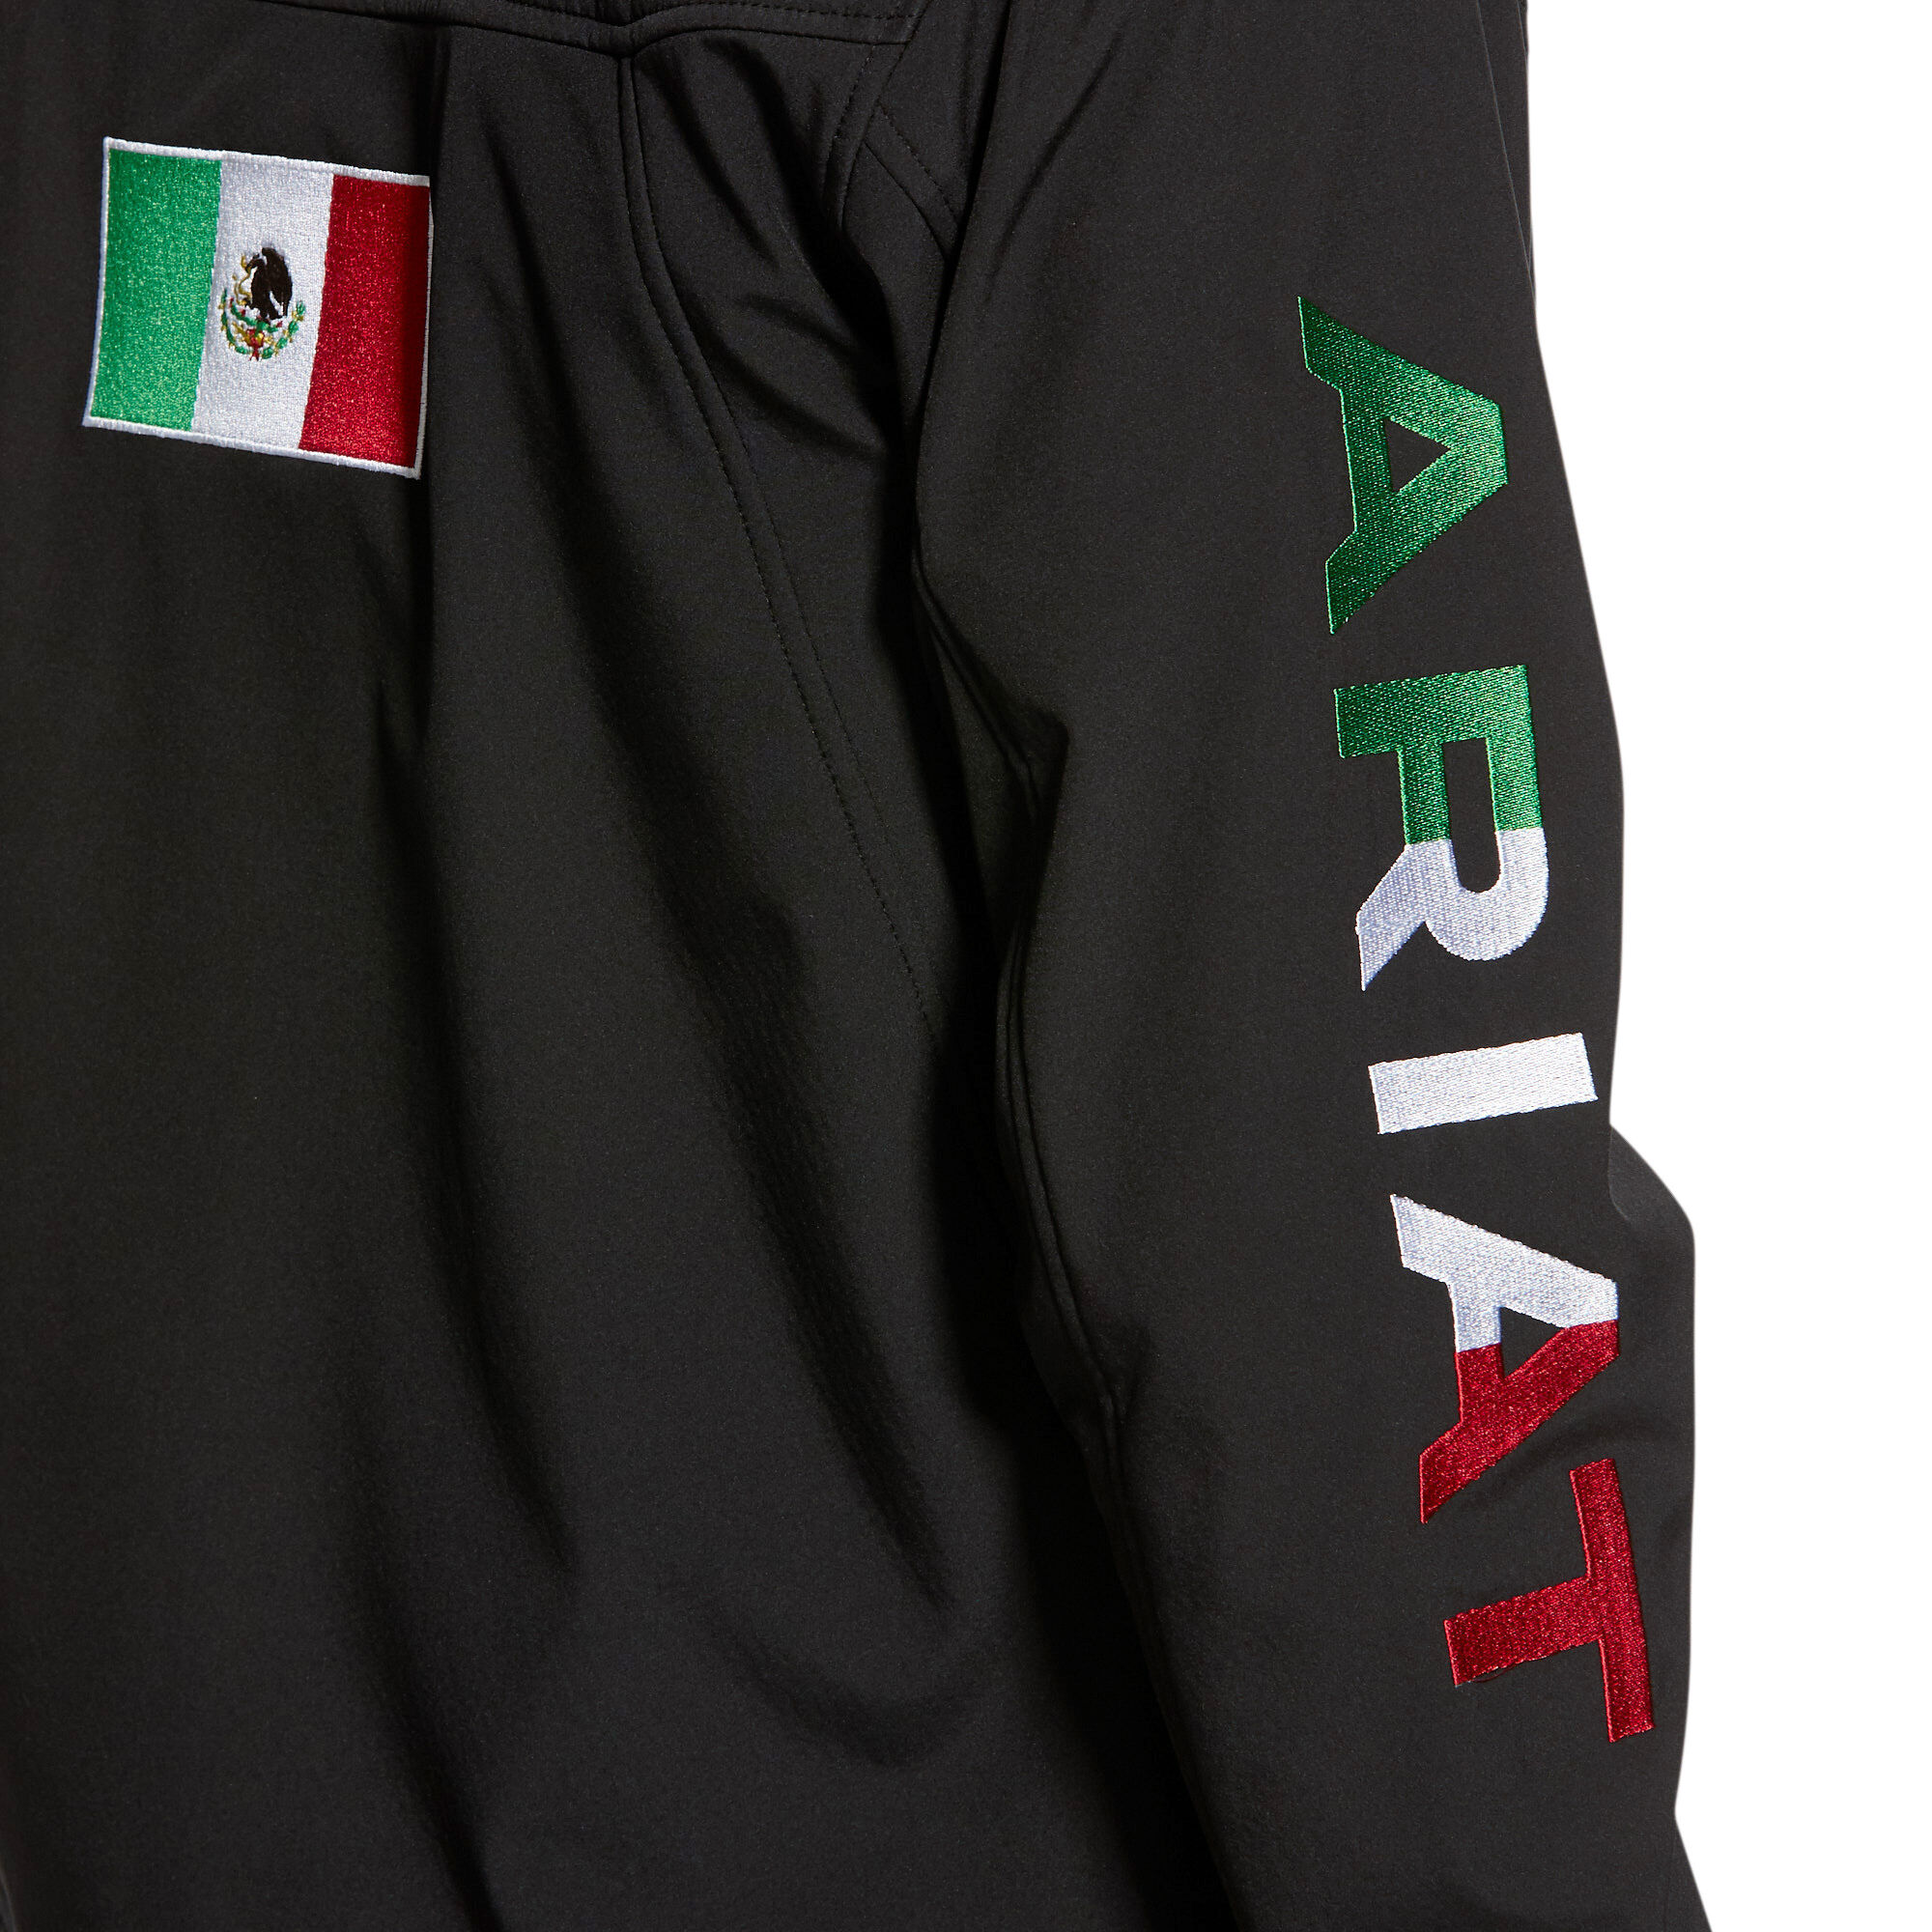 Classic Team Softshell MEXICO Jacket | Ariat